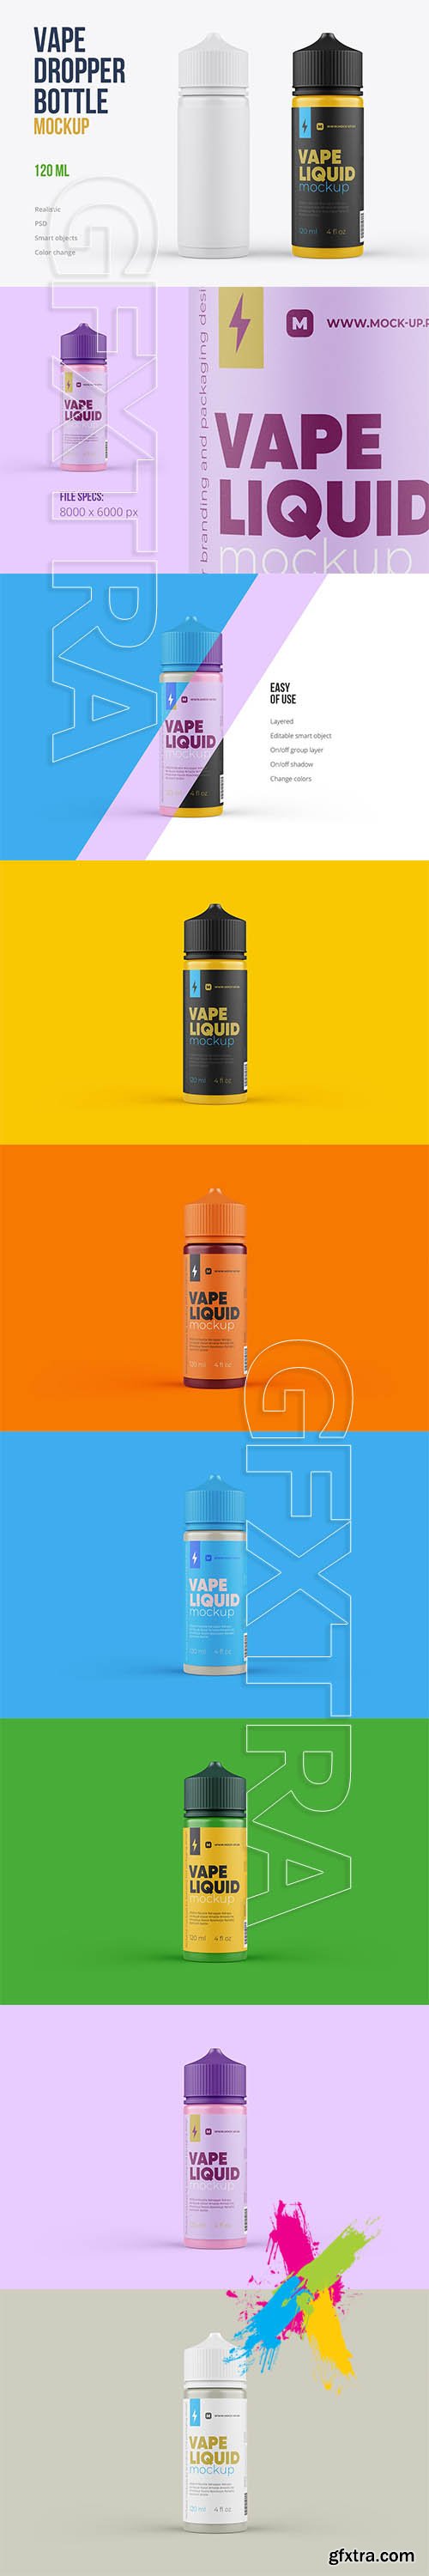 CreativeMarket - Vape Dropper Bottle Mockup 120ml 5750594